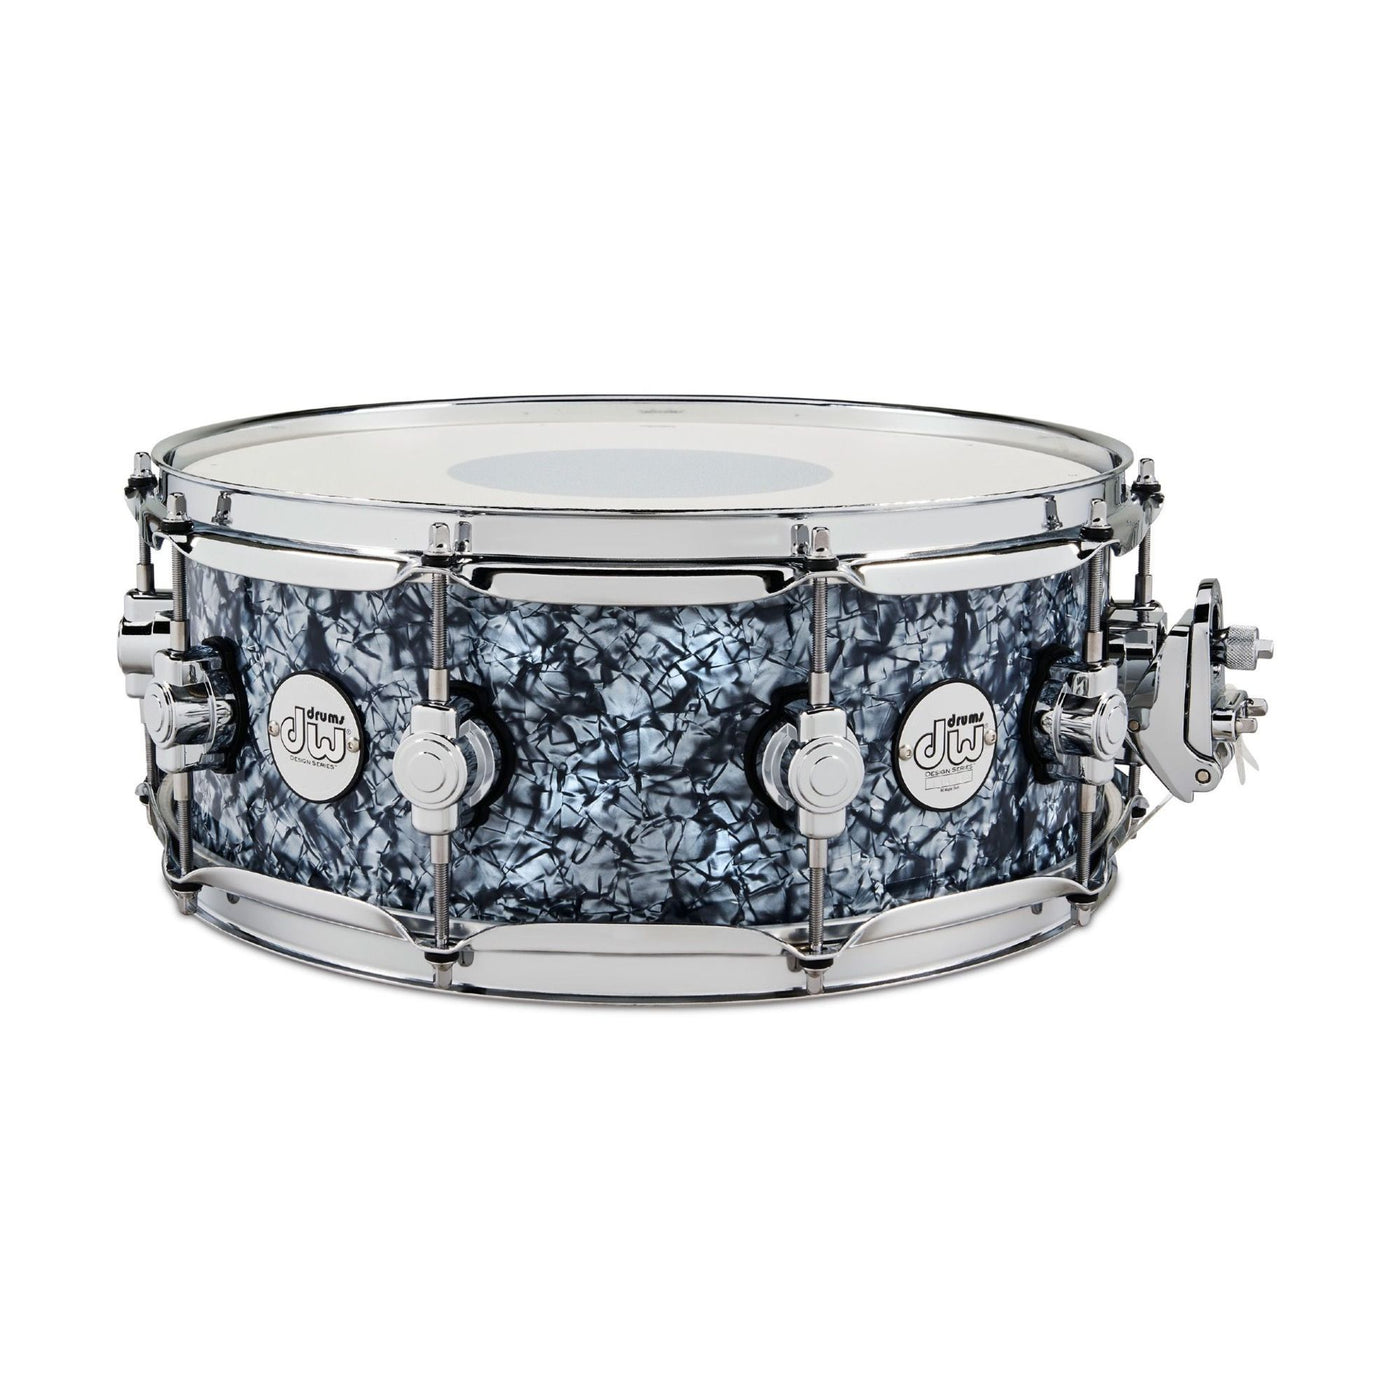 DW Design 5.5 x 14-inch Snare Drum, Silver Slate Marine